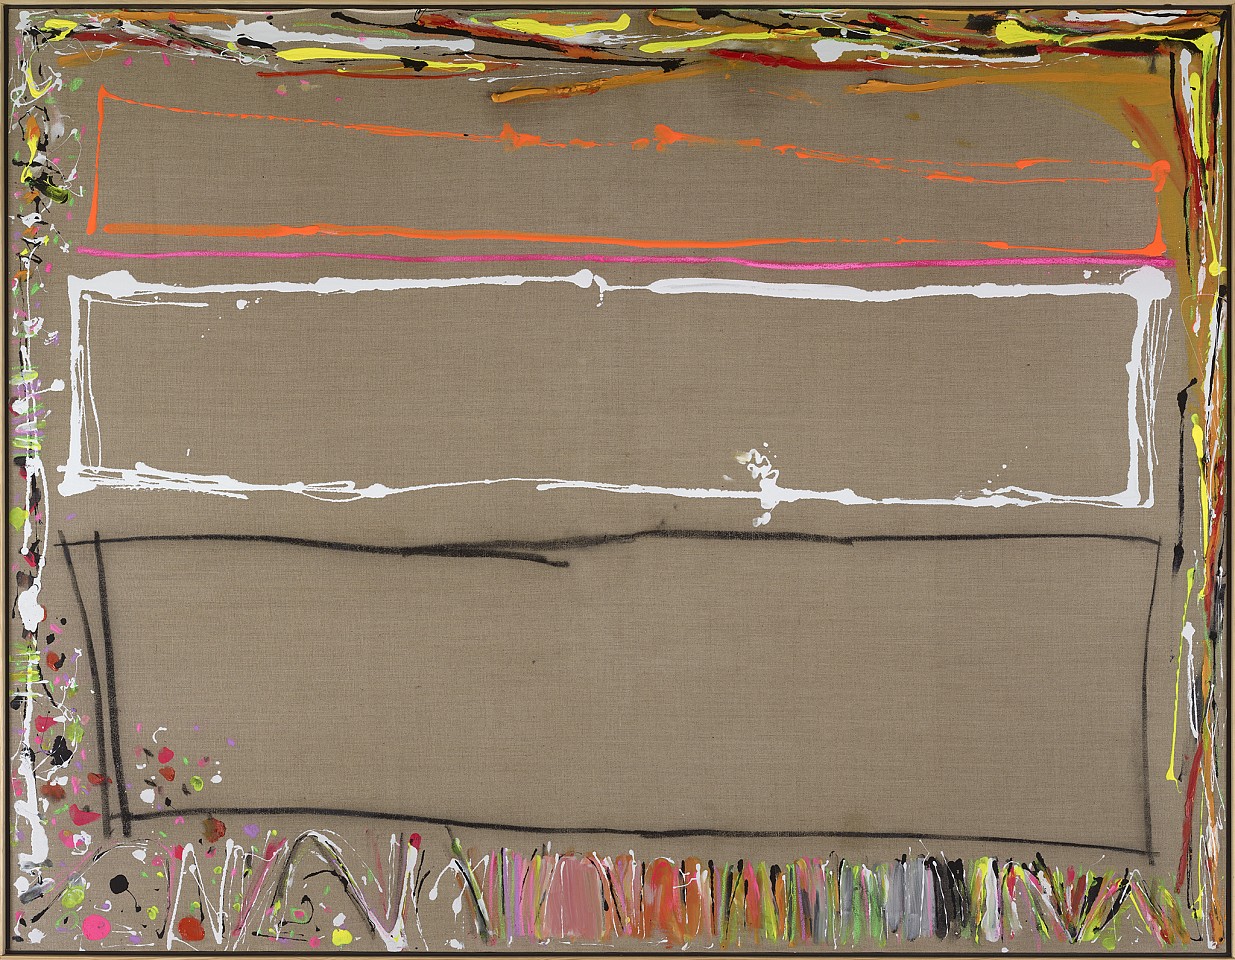 Joyce Weinstein, Summer Ancramdale Fields, 2018
Oil and mixed media on linen, 54 x 70 in. (137.2 x 177.8 cm)
WEI-00033